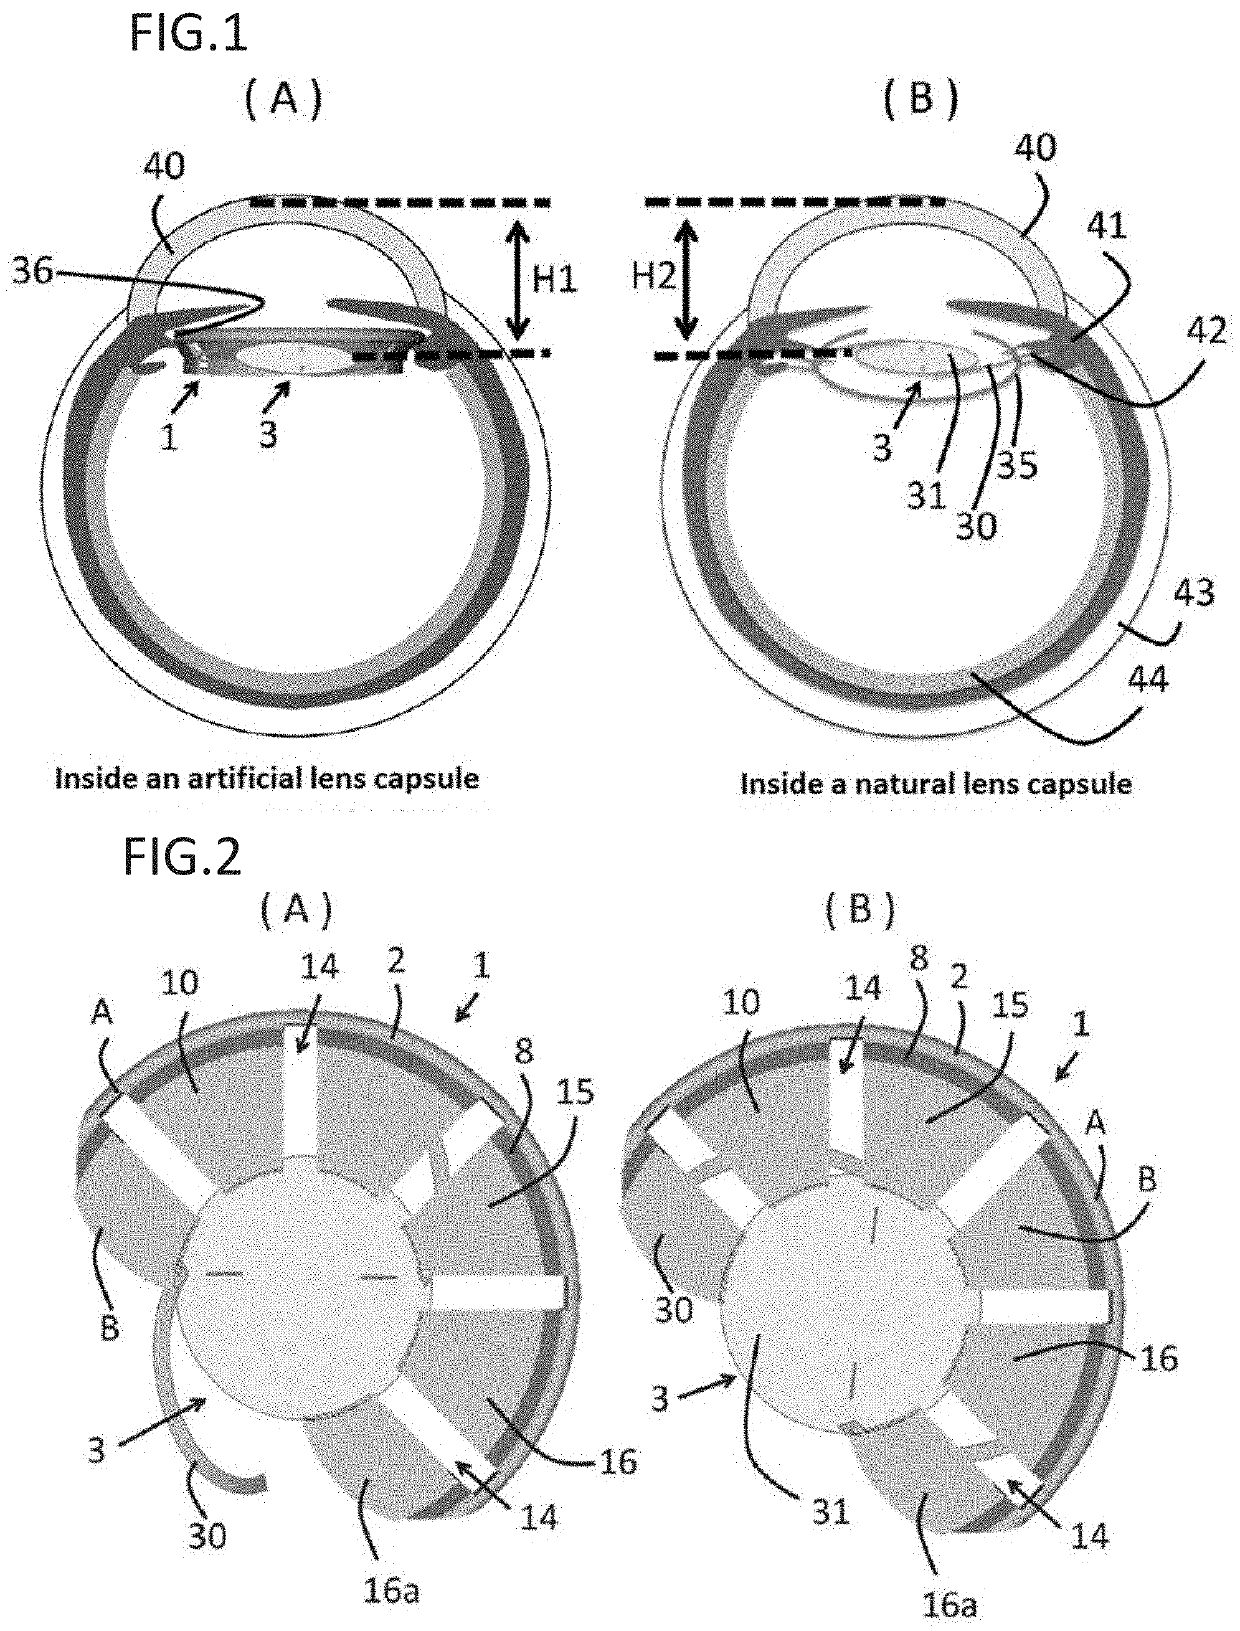 Artificial lens capsule